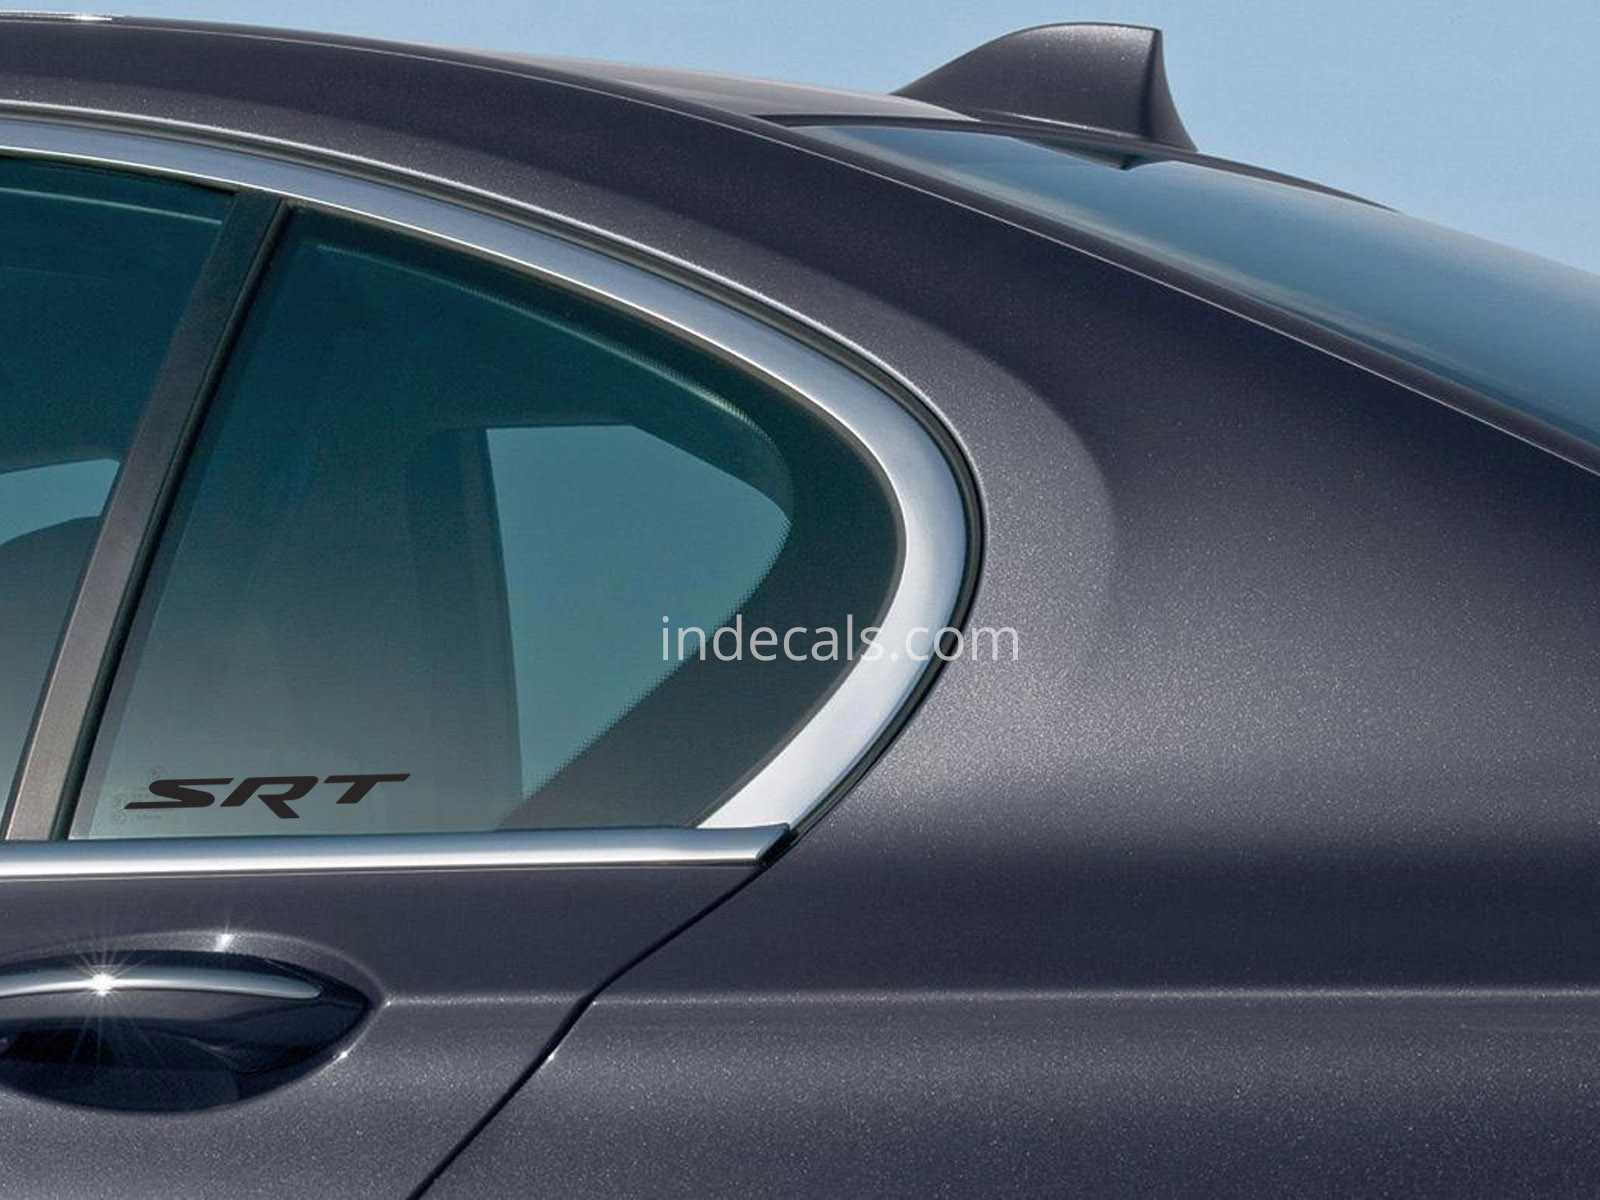 3 x Dodge SRT Stickers for Rear Window - Black